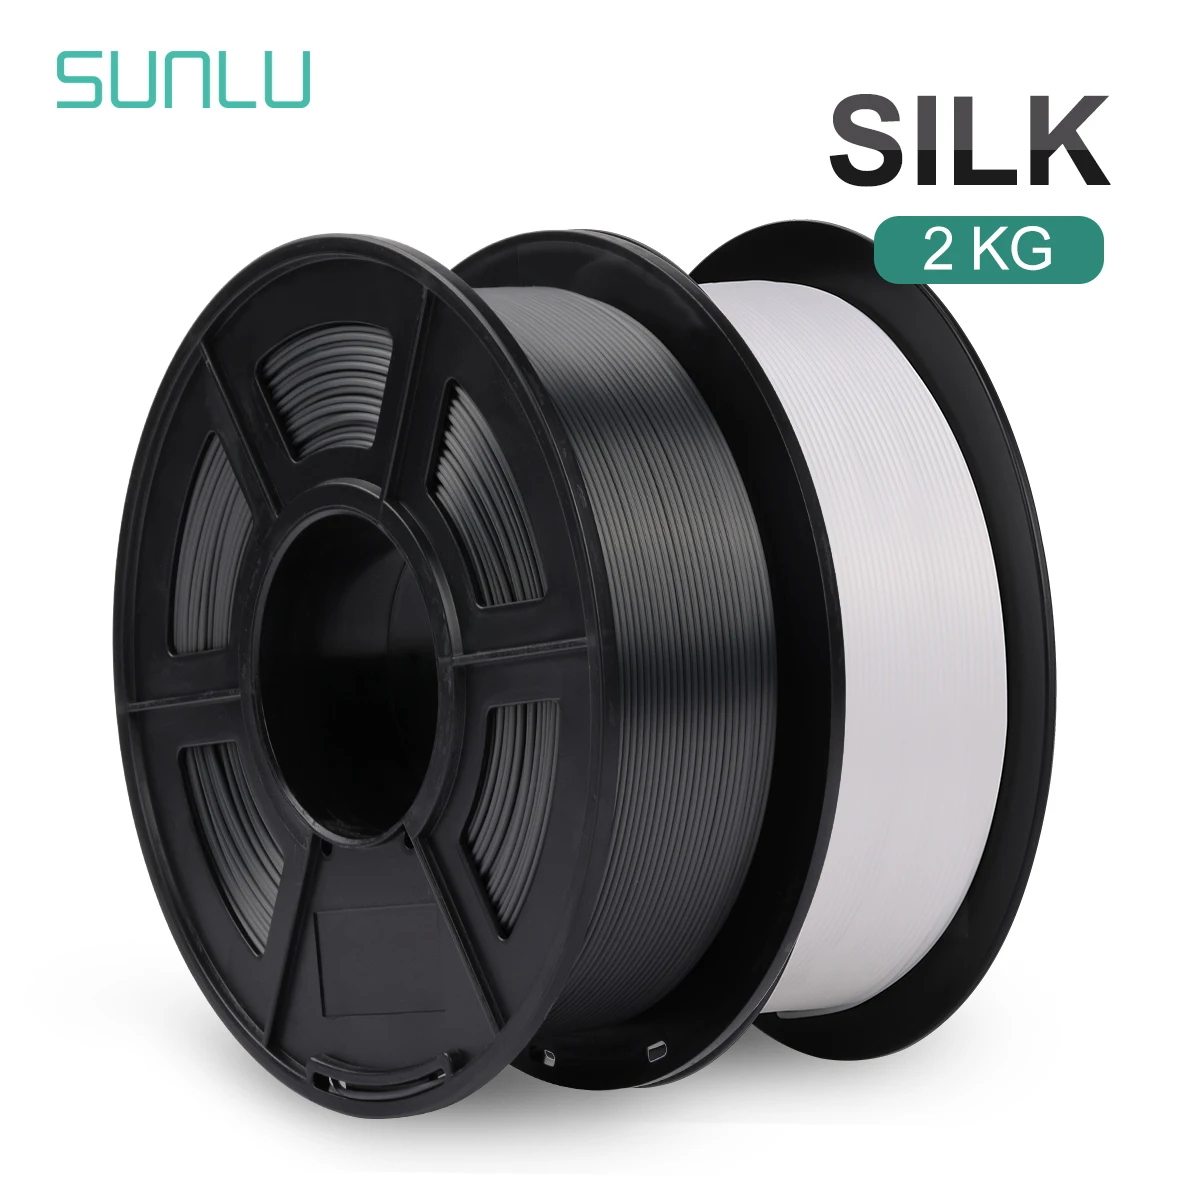 SUNLU 2KG SILK Filament PLA 1.75mm Multiple Colors Mix 2Roll 3D Printer Filament For DIY Gifts exture Tangle free no bubbles